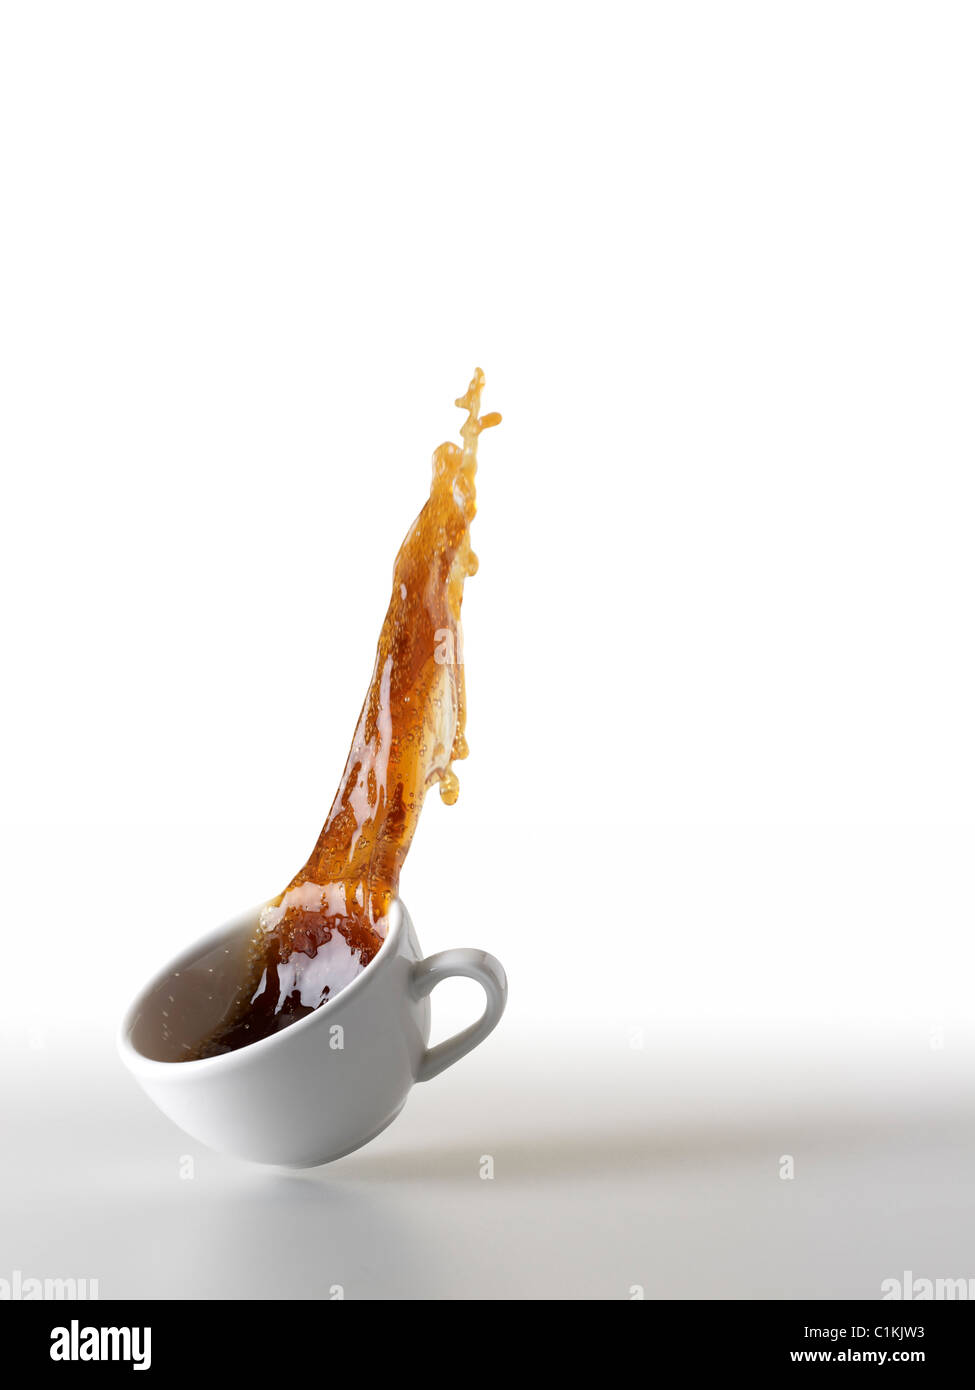 https://c8.alamy.com/comp/C1KJW3/coffee-spilling-out-of-coffee-cup-C1KJW3.jpg